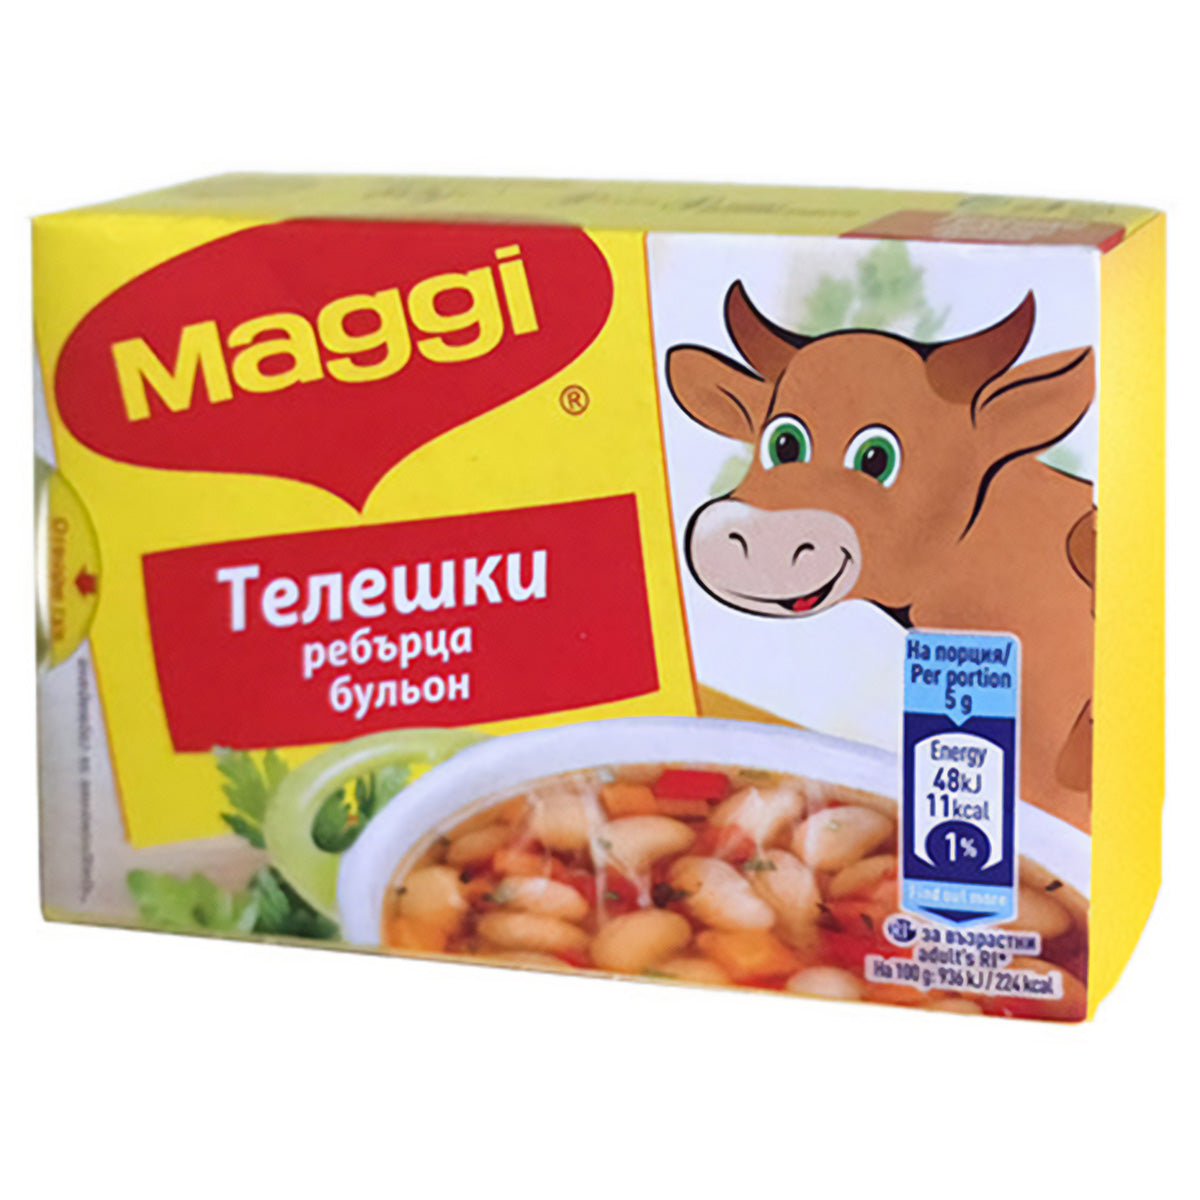 Maggi - Beef Seasoning Cubes - 80g - Continental Food Store